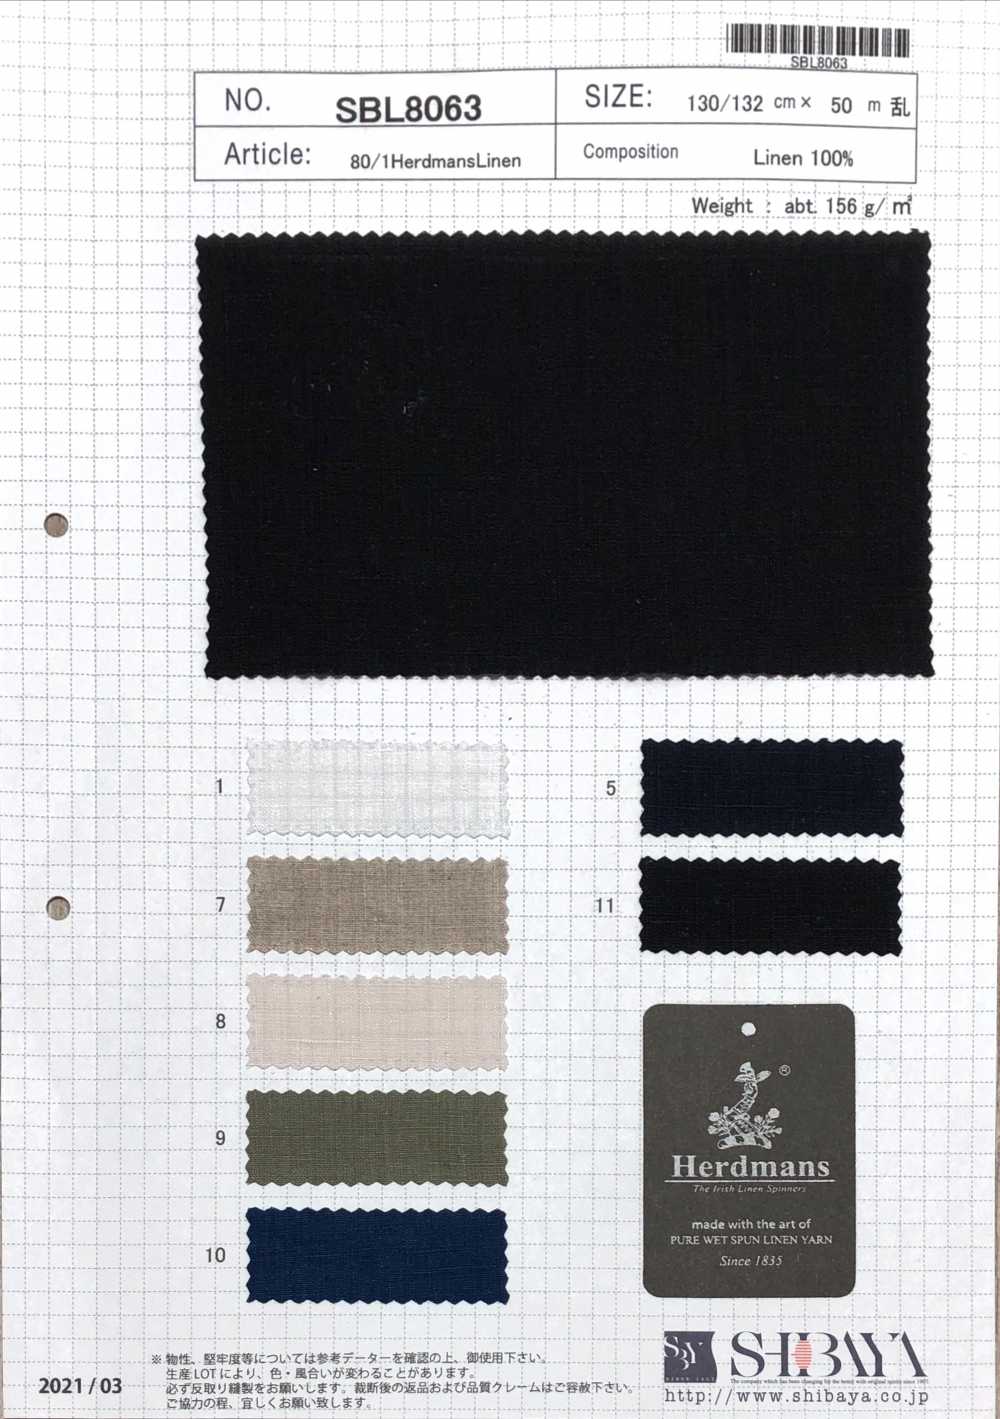 SBL8063 Linge De Hardman 80/1[Fabrication De Textile] SHIBAYA